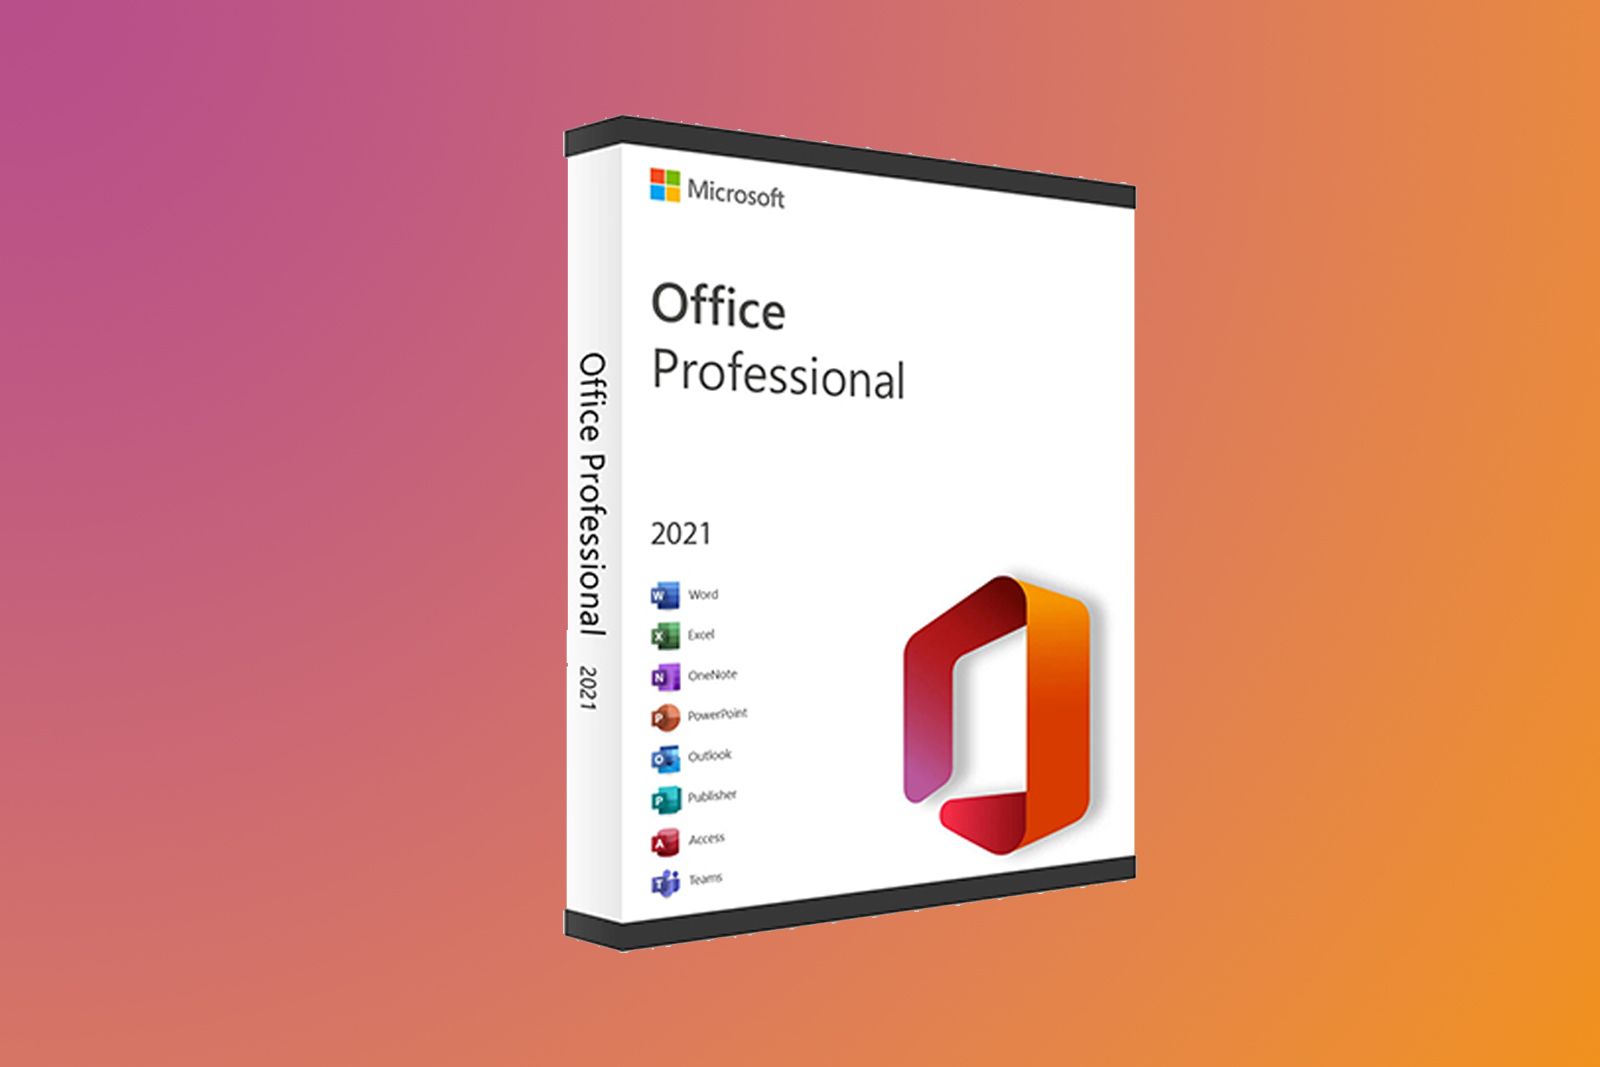 Microsoft Office Professional 2021